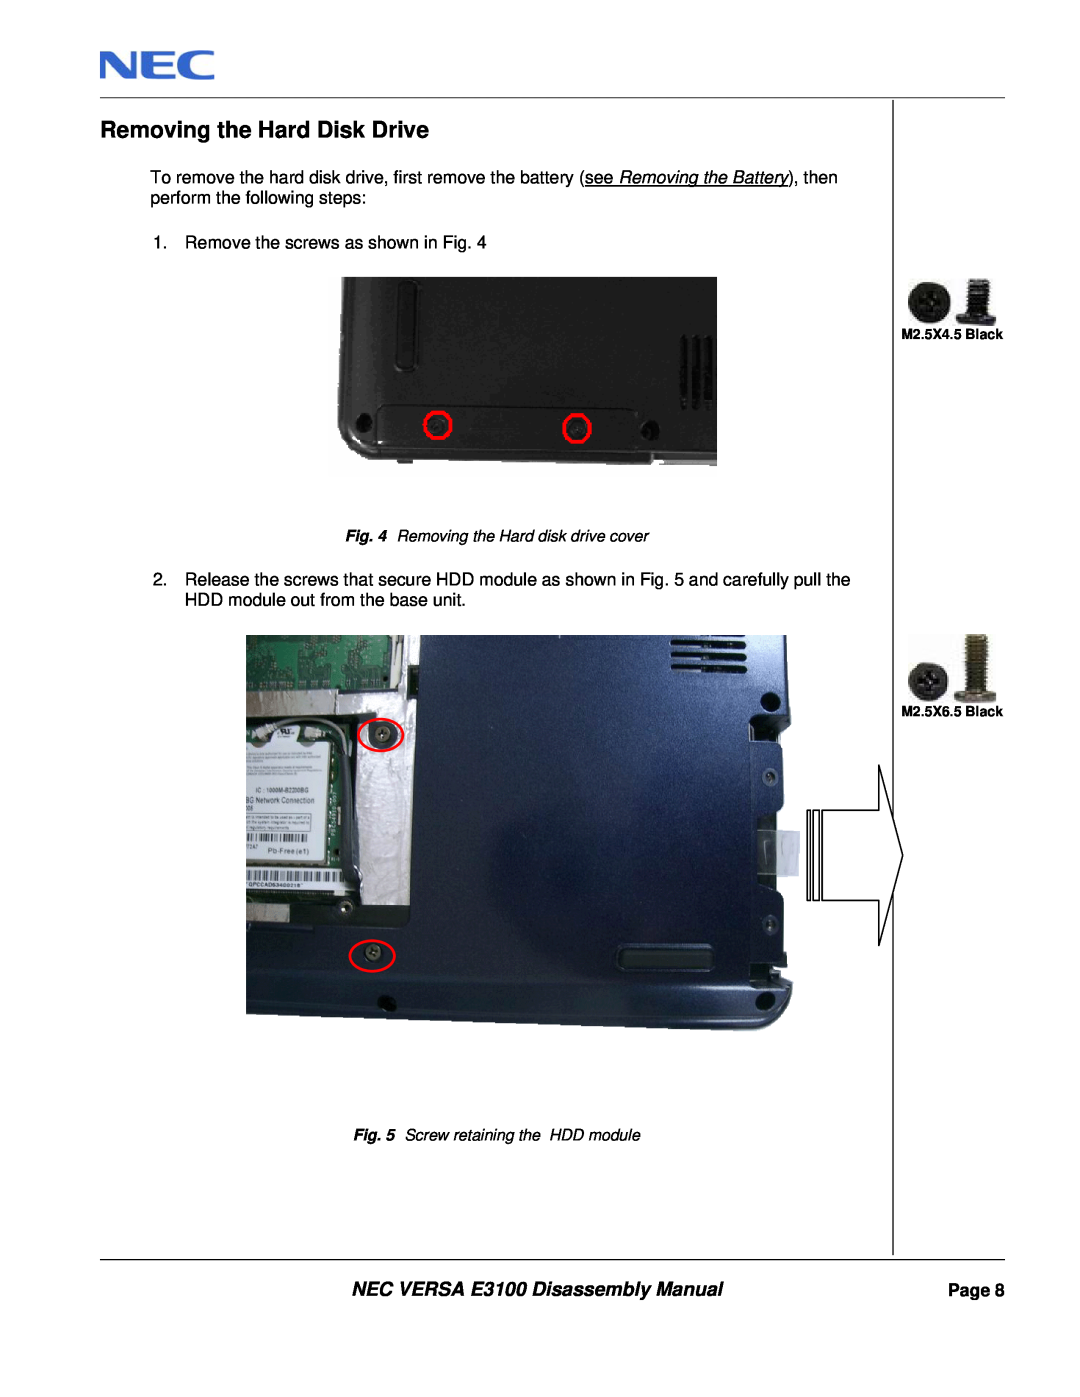 NEC manual Removing the Hard Disk Drive, NEC VERSA E3100 Disassembly Manual 